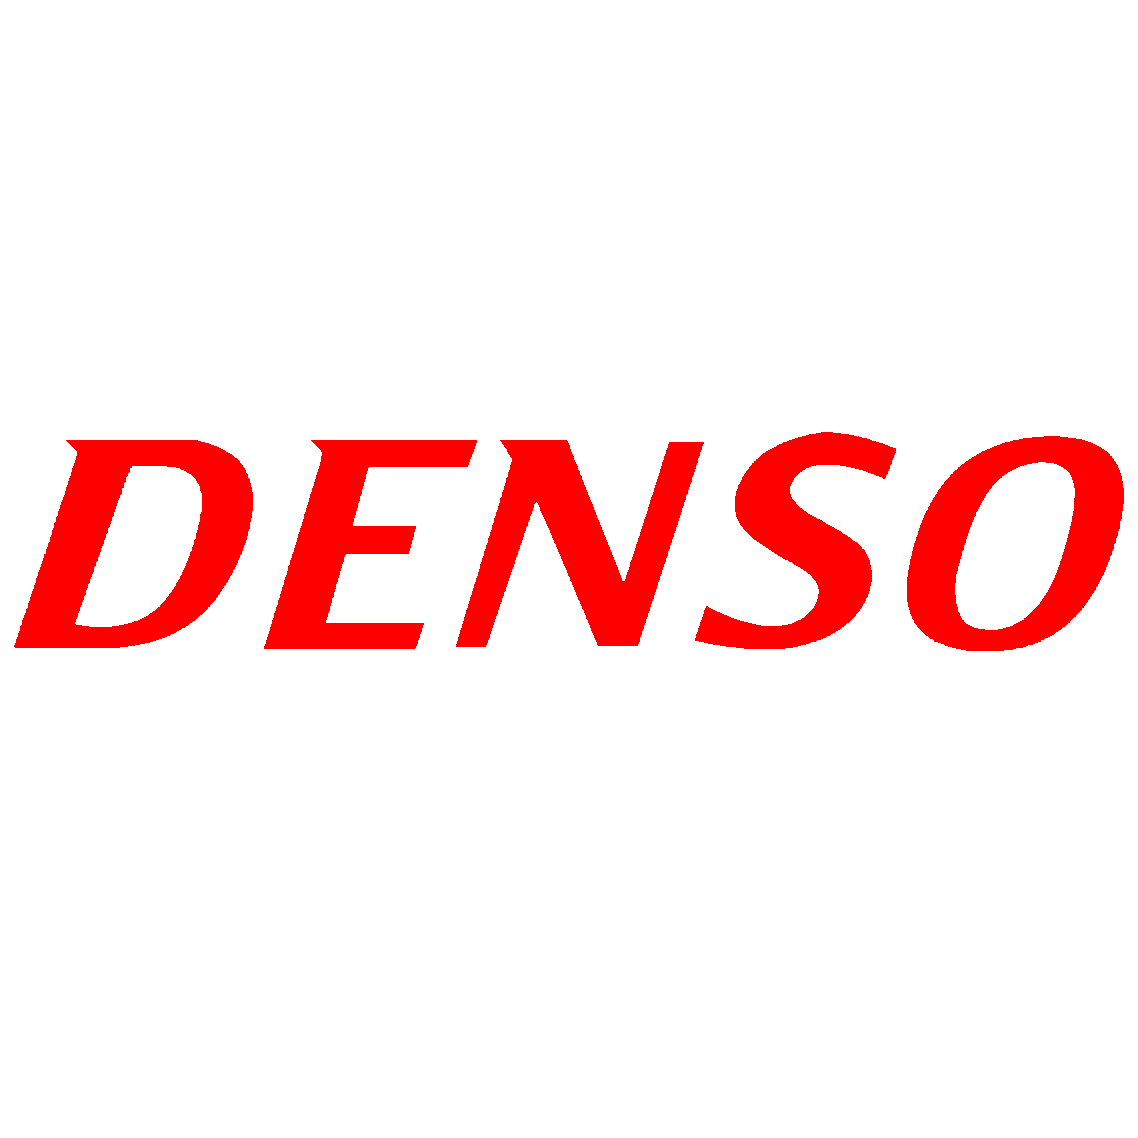 Denso_logo_-_squared